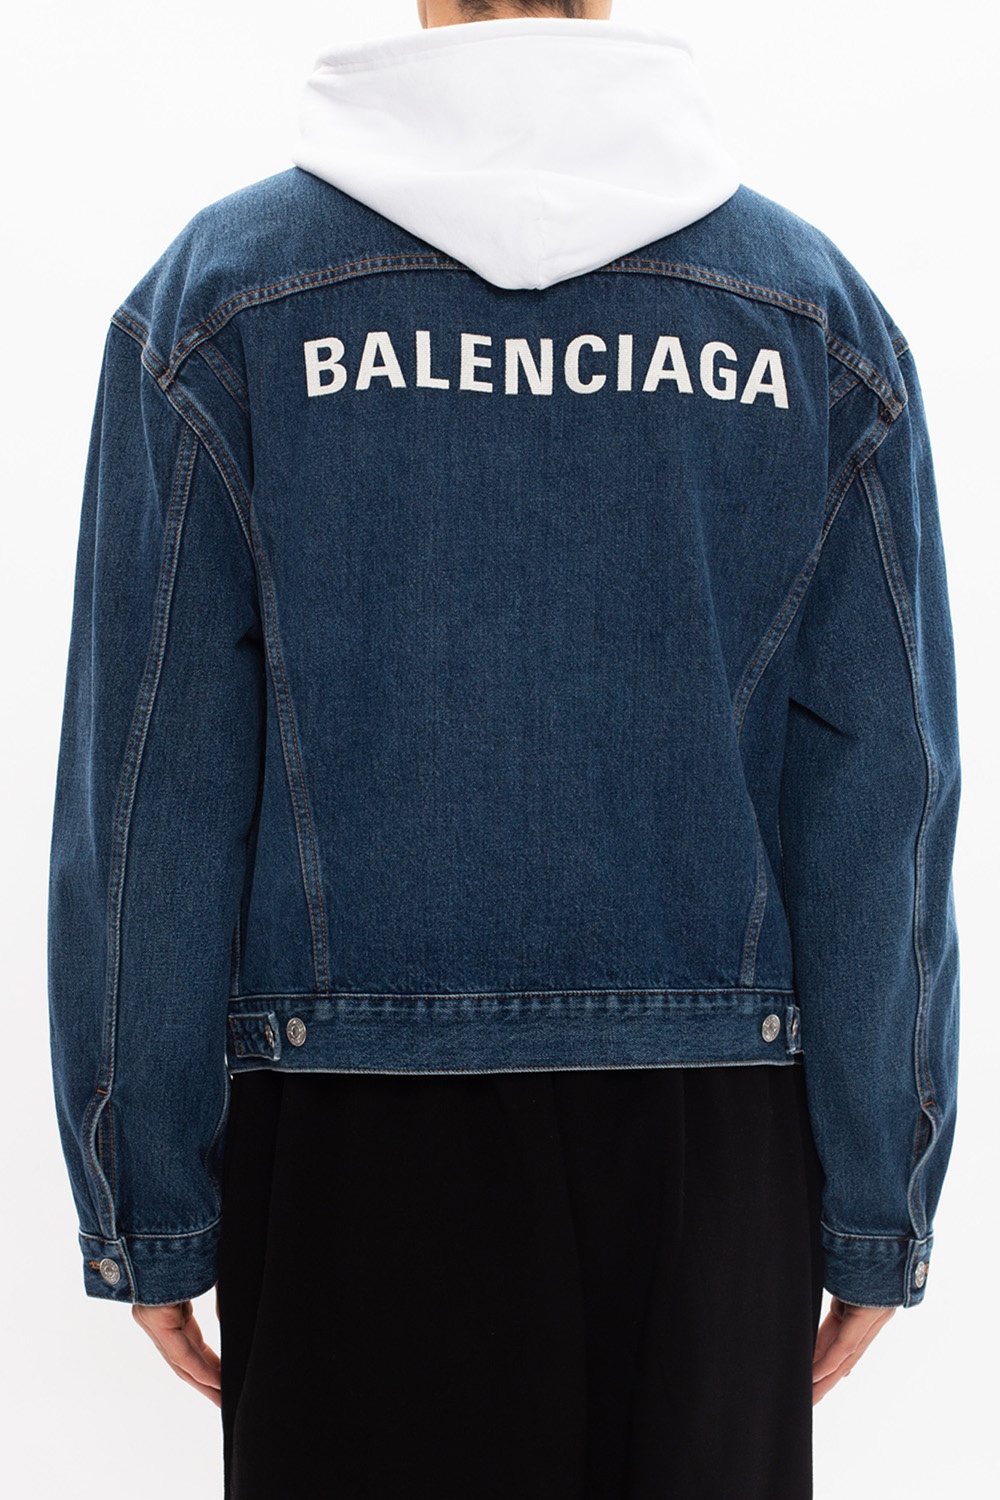 Balenciaga Gucci's Black Vintage Logo T-Shirt Is the Fashion Staple You Need